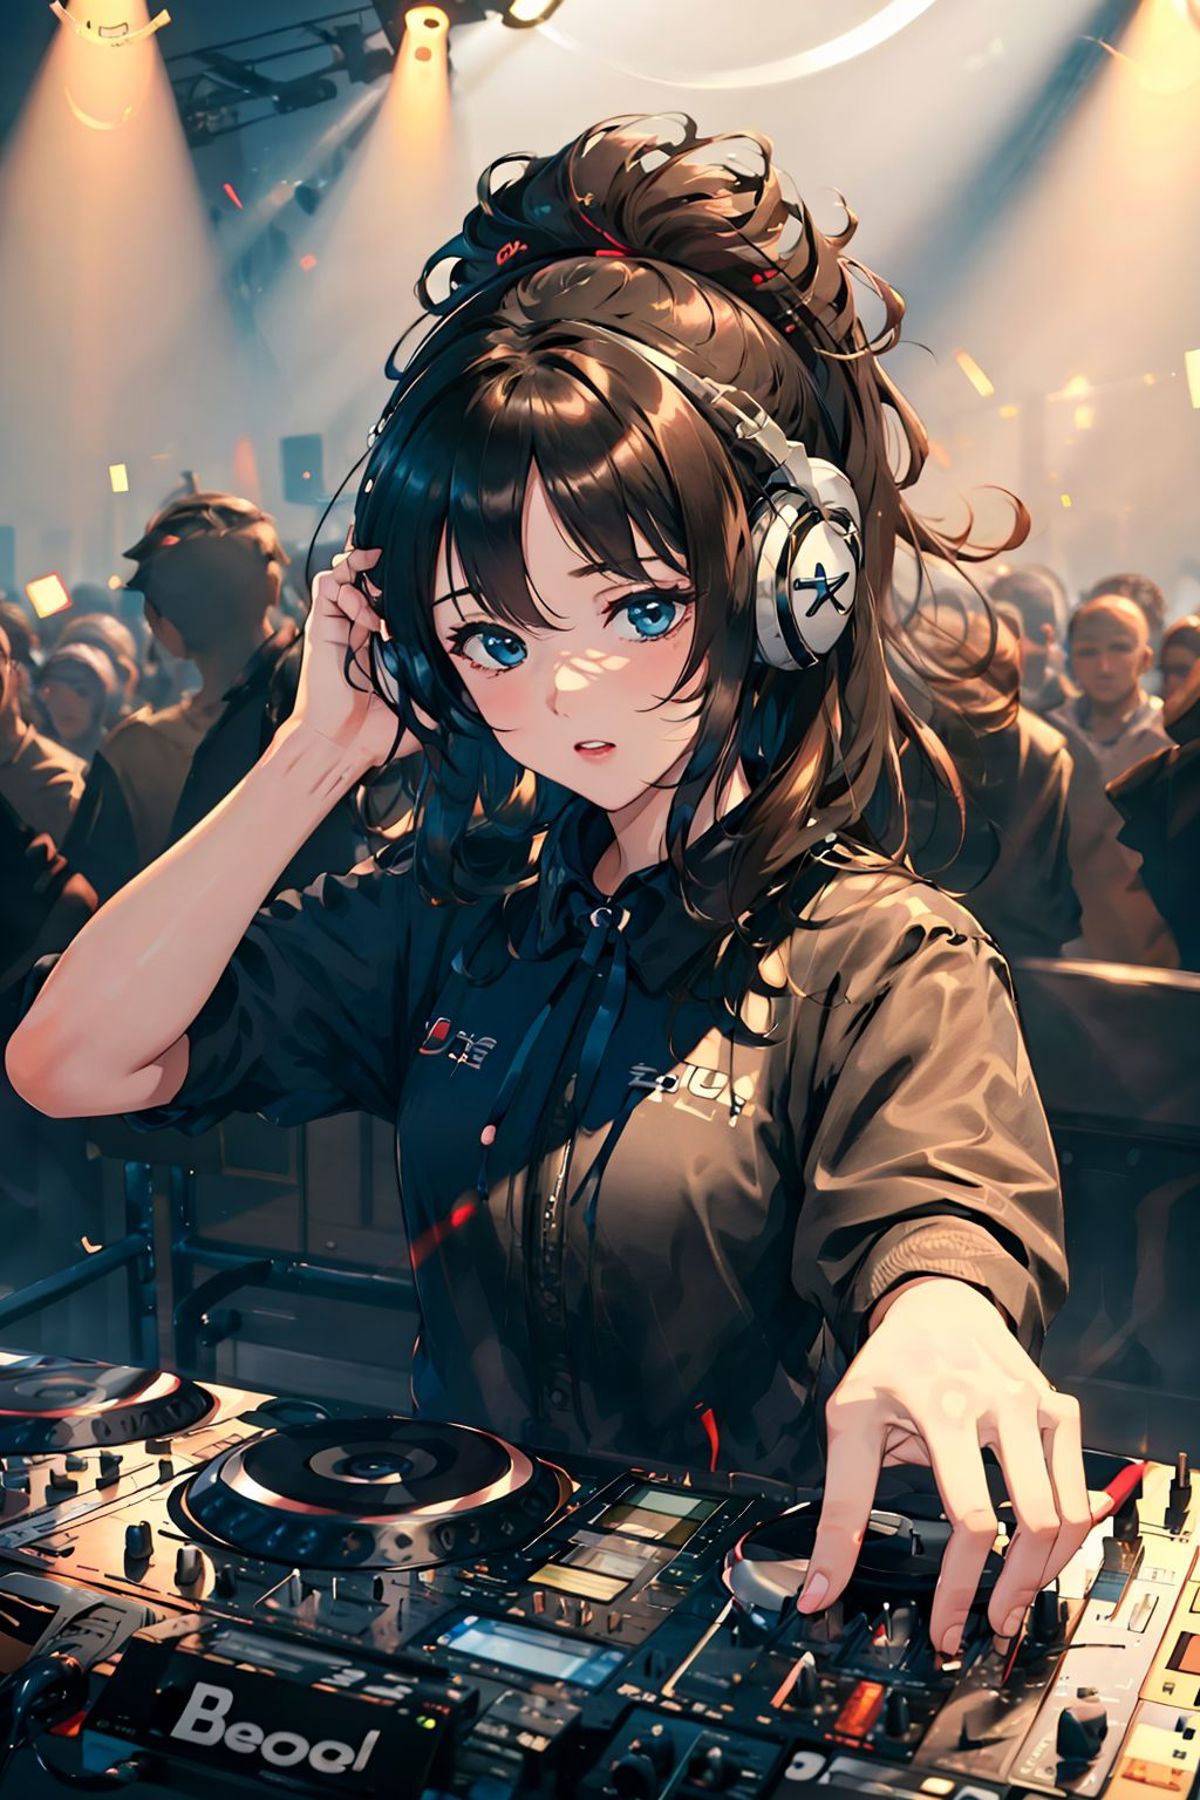 DJ electronic music image by ChaosOrchestrator